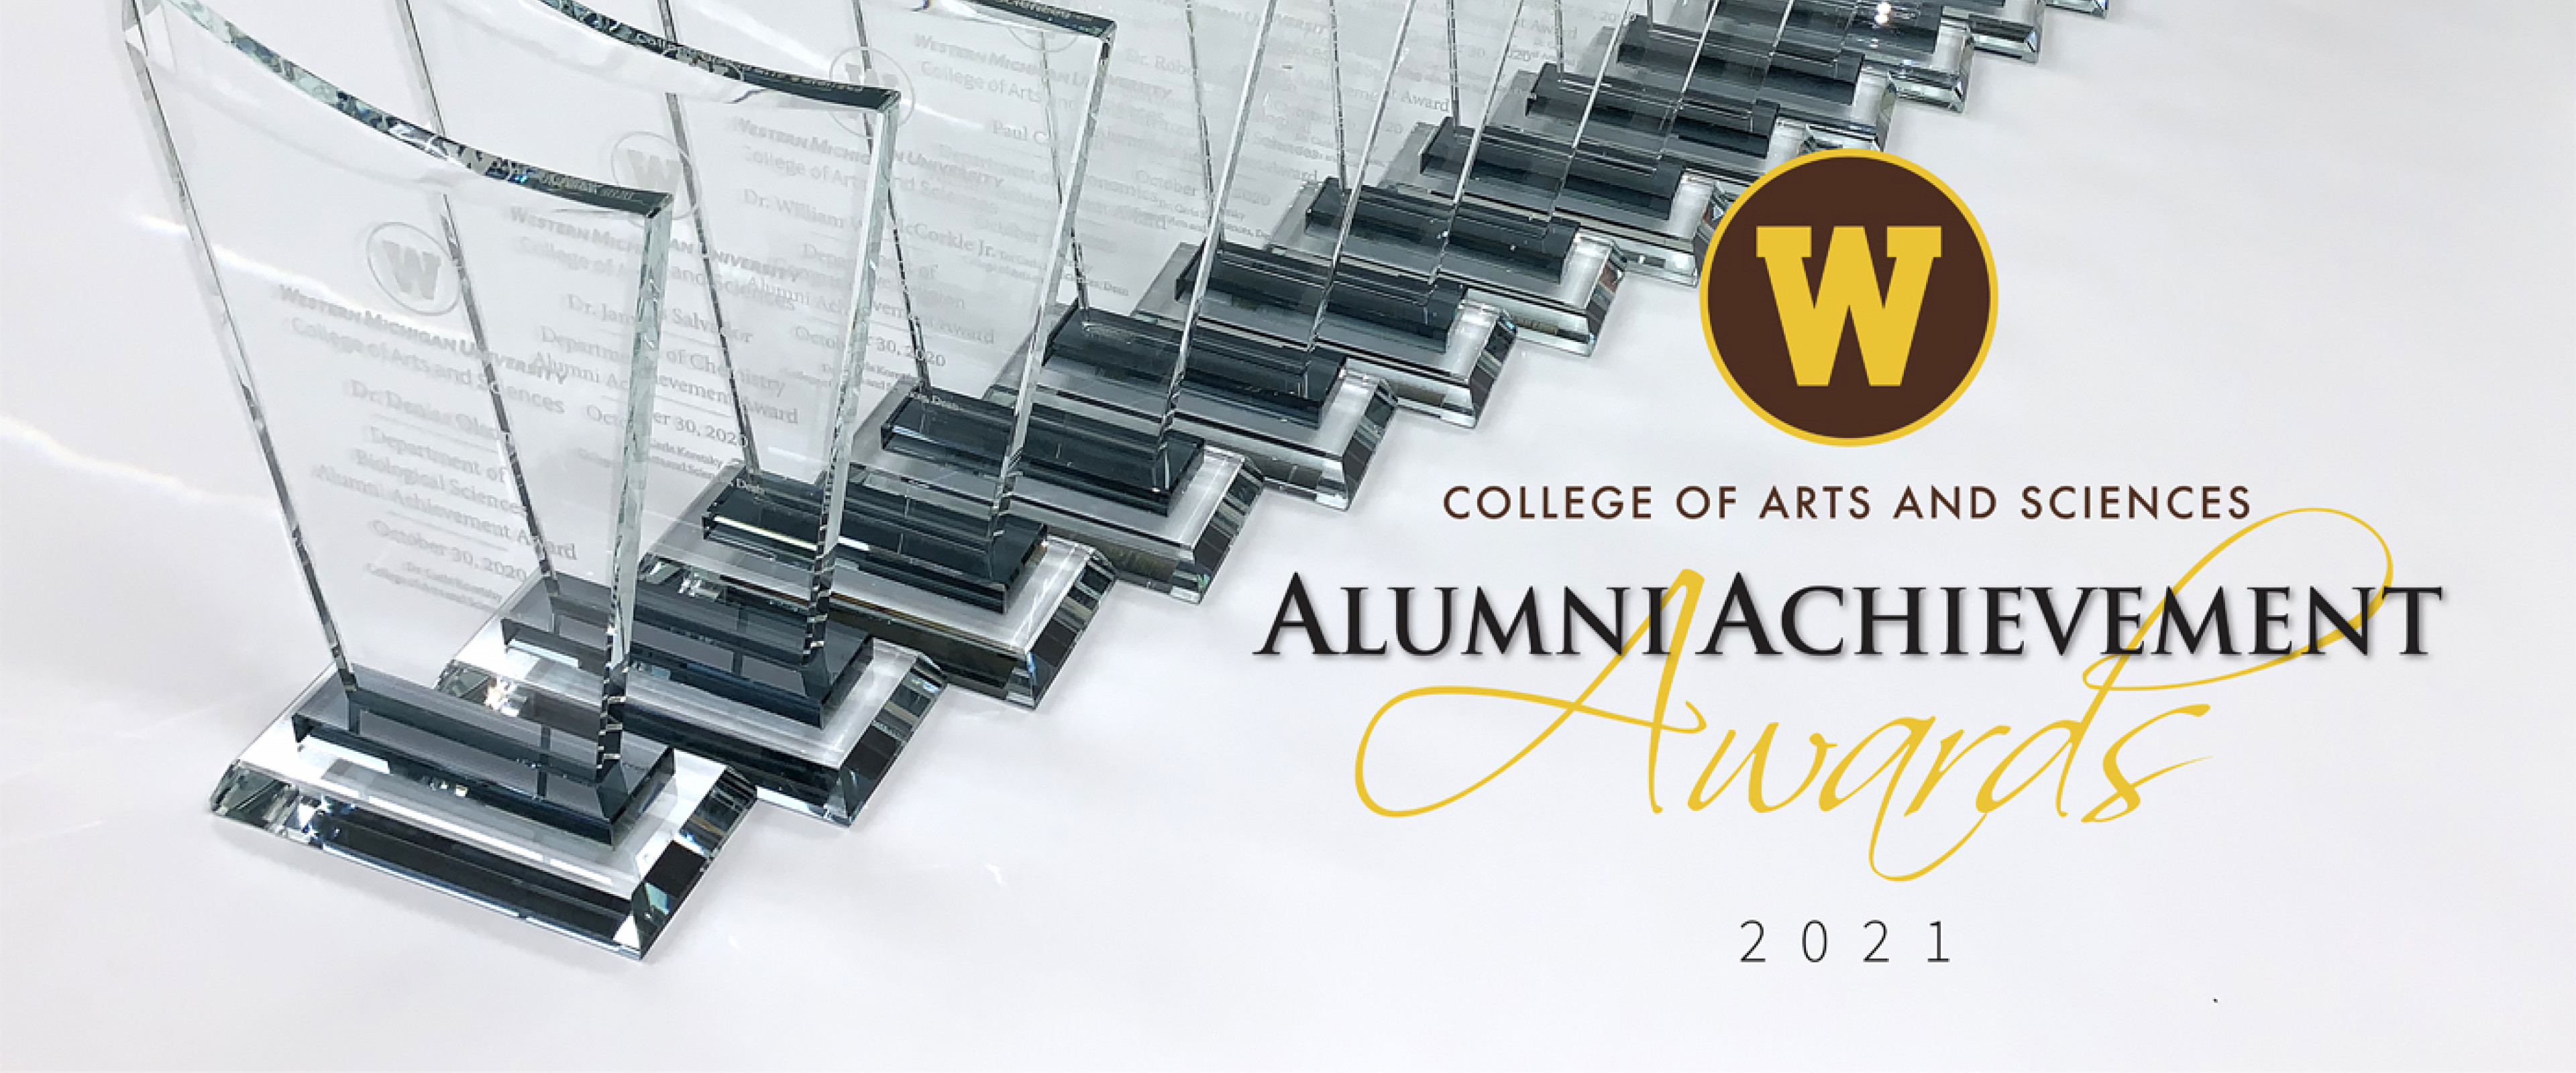 College of Arts and Sciences Alumni Achievement Awards 2021